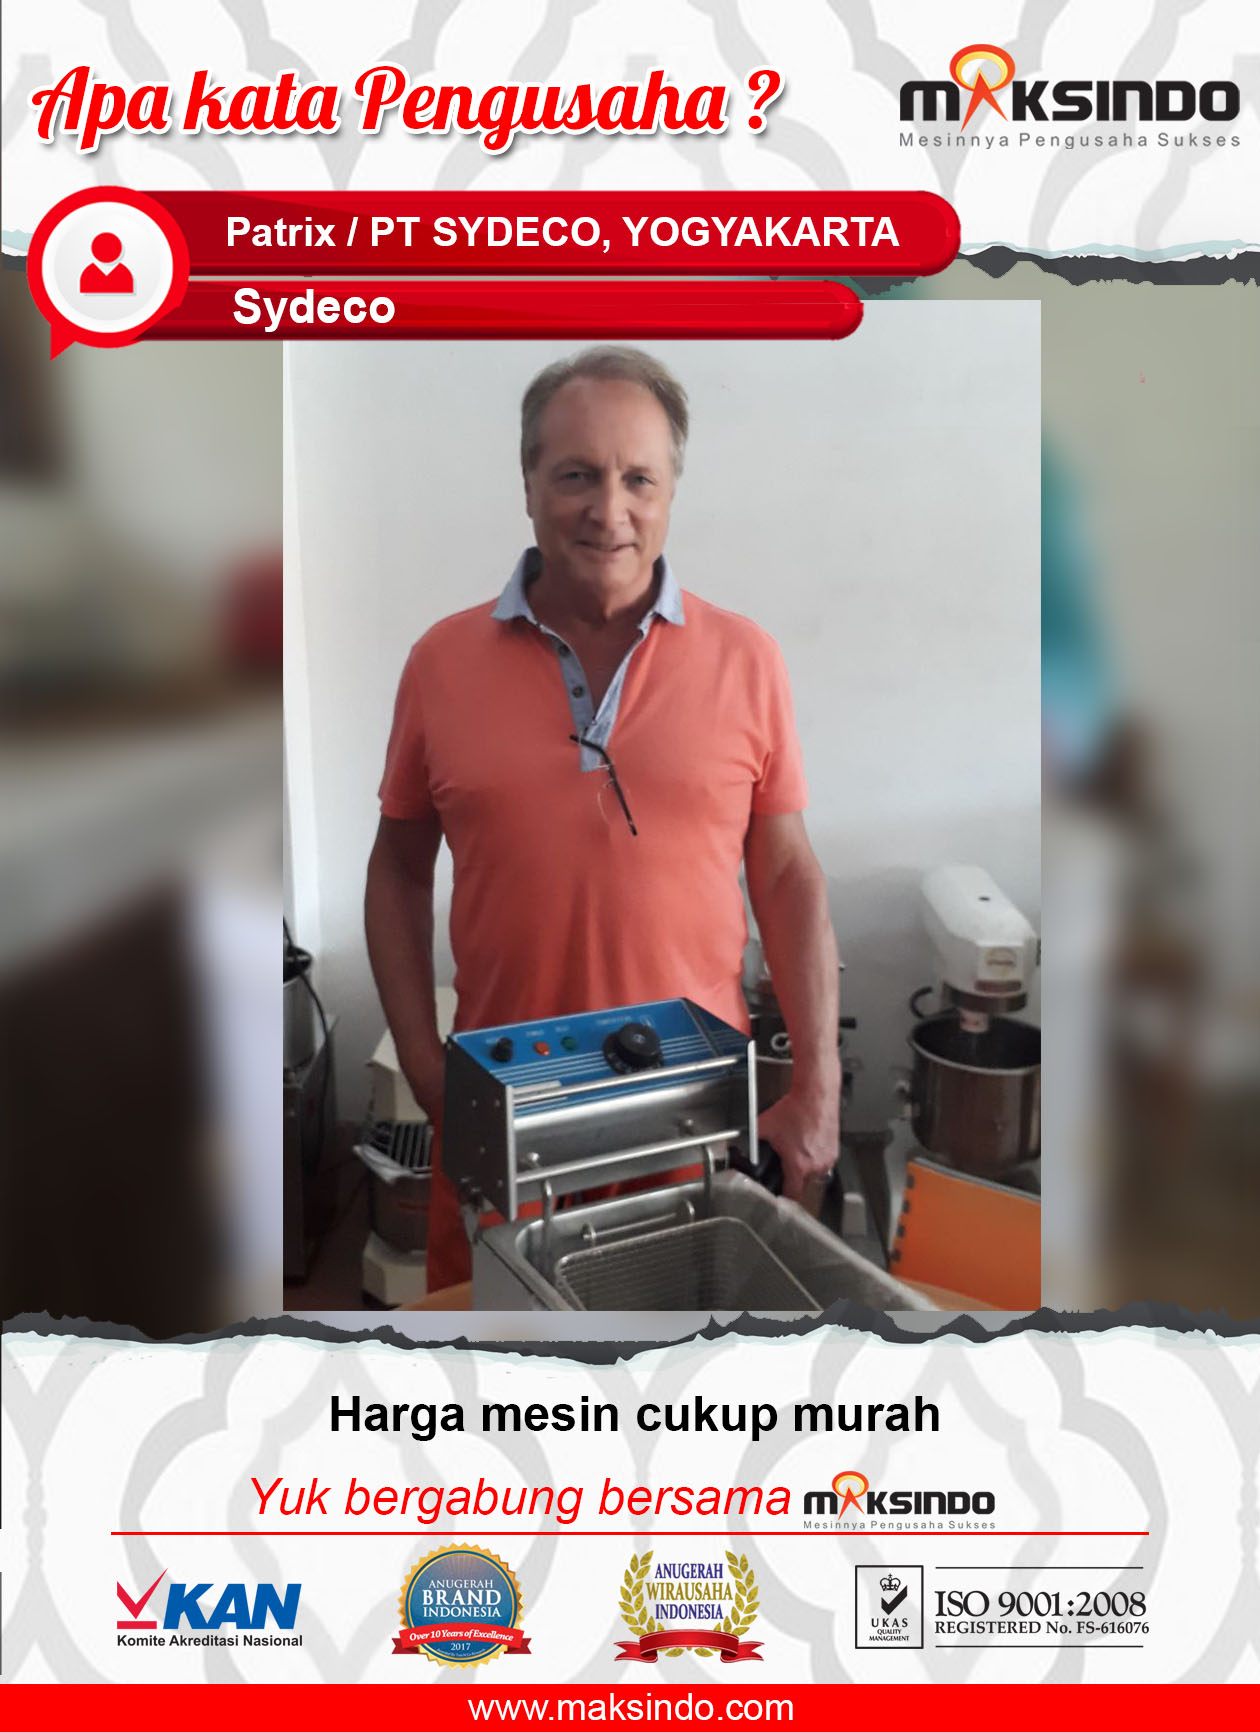 PT Sydeco : Mesin Deep Frying Maksindo Harga Cukup Murah